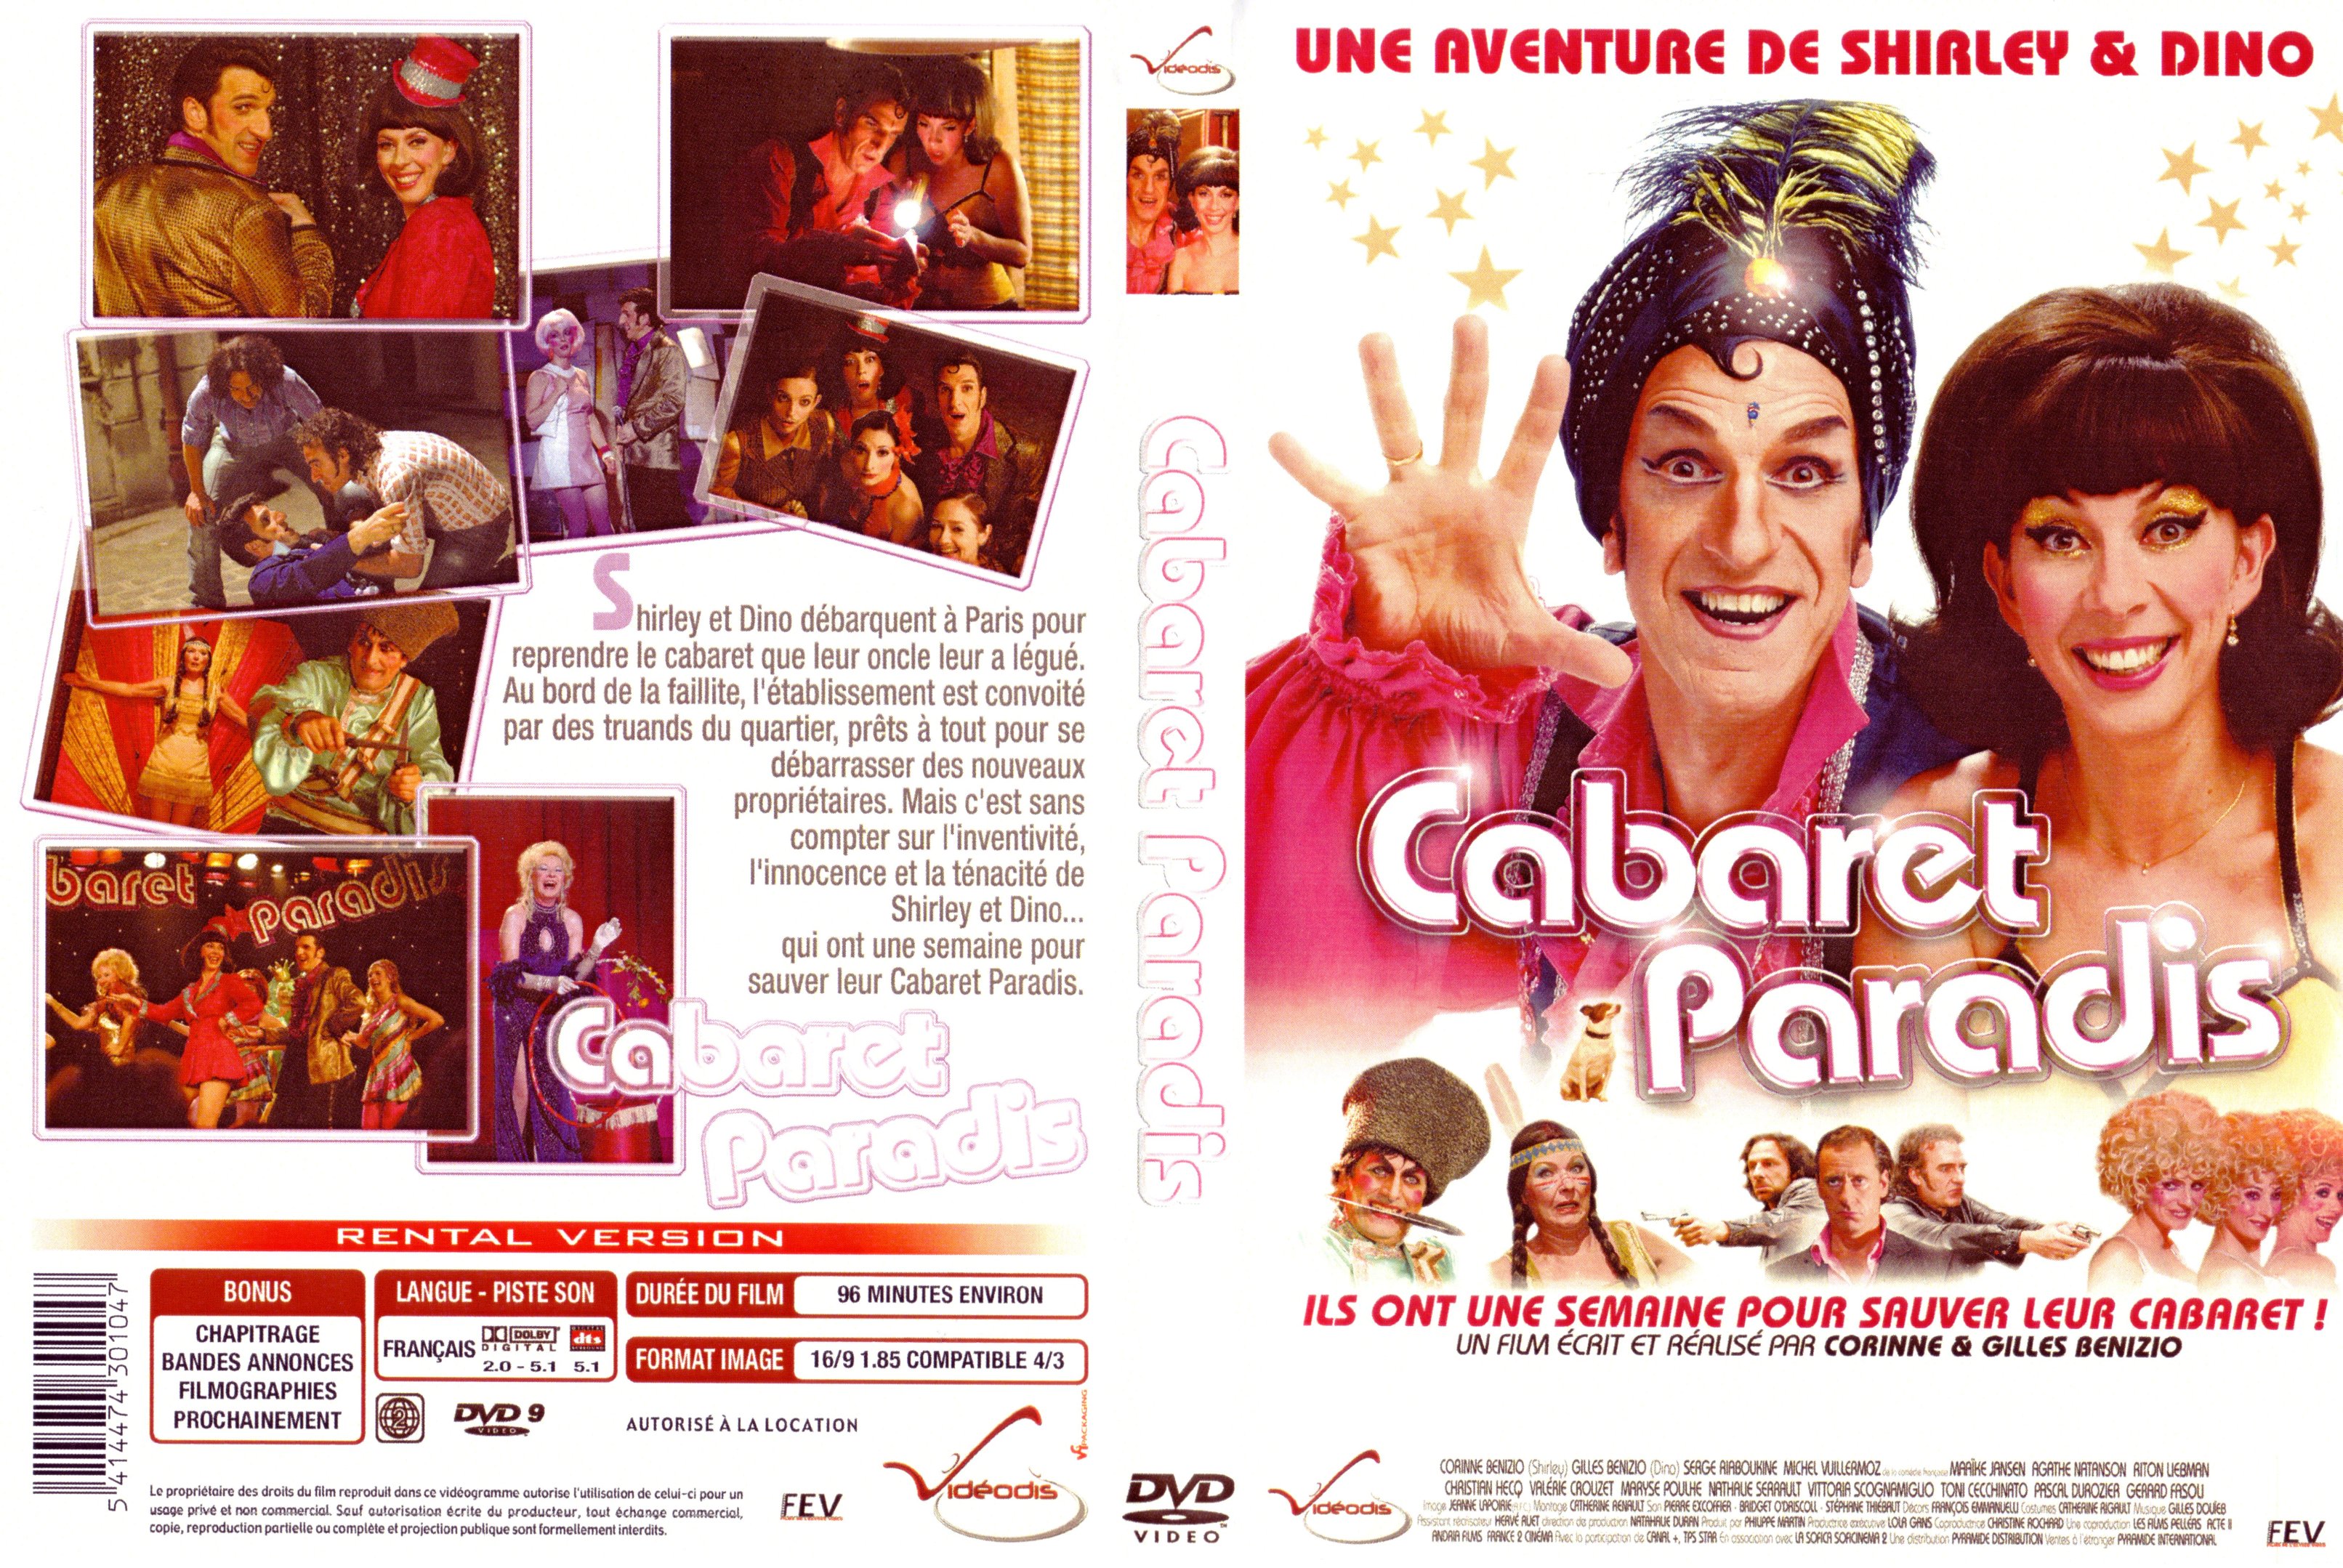 Jaquette DVD Cabaret Paradis v2